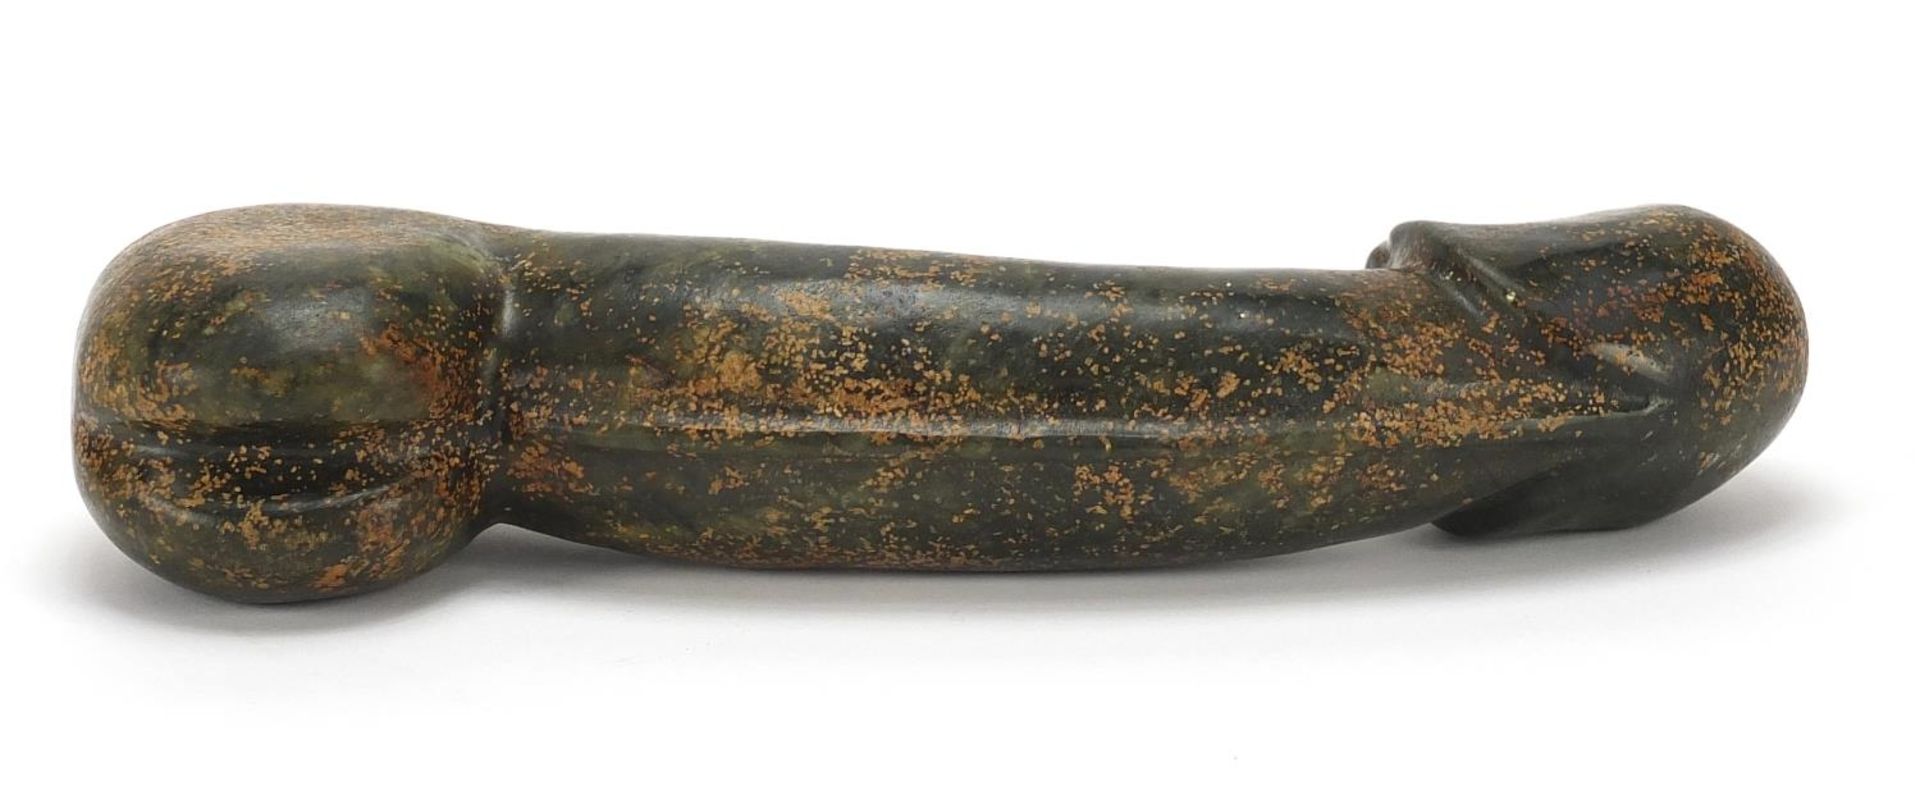 Islamic green hardstone phallus, 27cm in length - Image 3 of 3